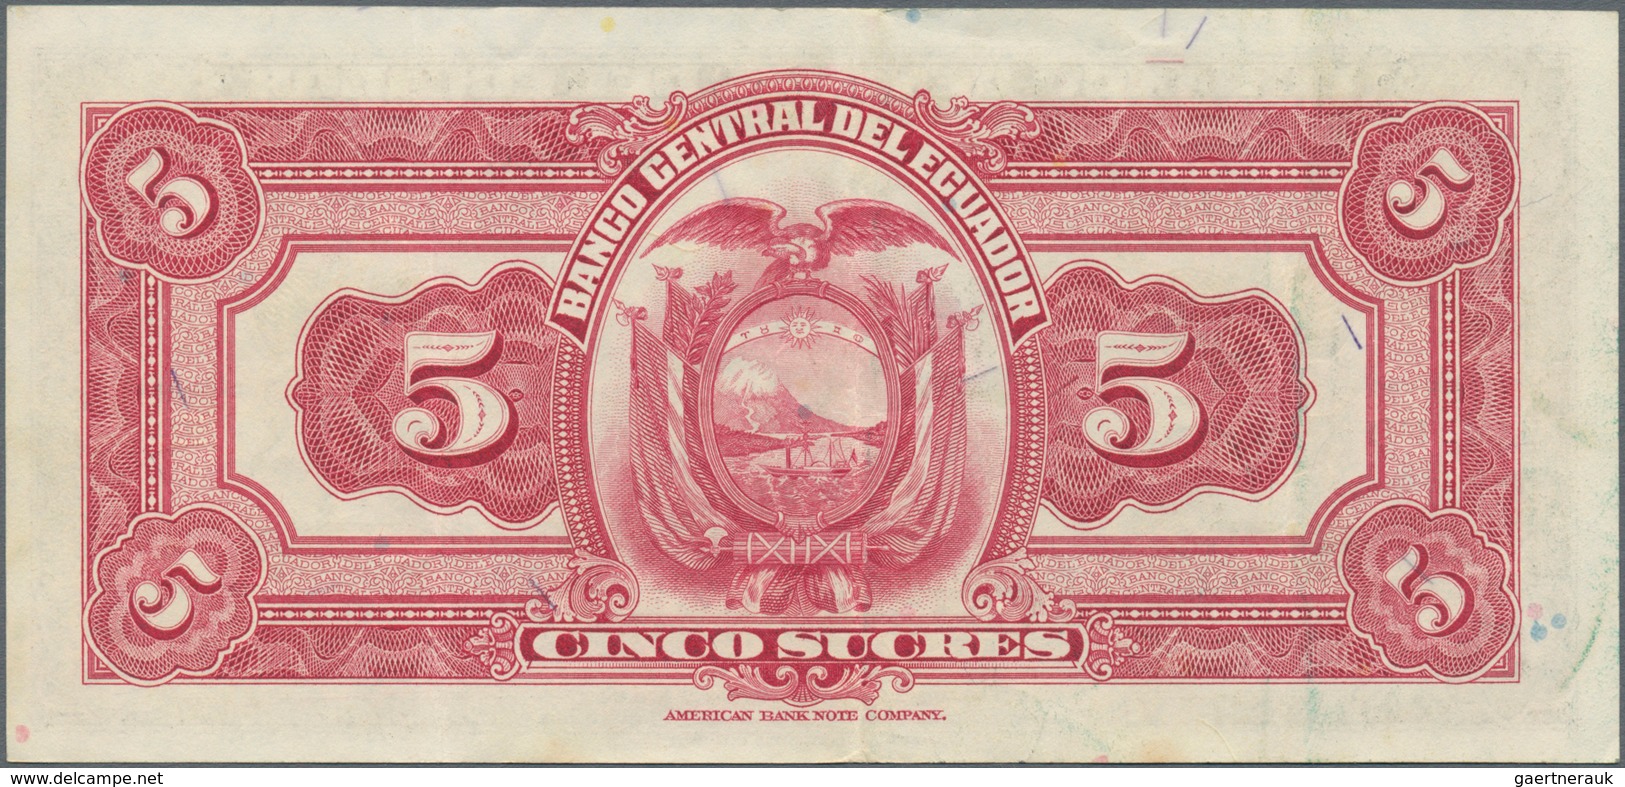 Ecuador: El Banco Central Del Ecuador 5 Sucres 1938 P.84d (VF), 5 Sucres 1945 P.91b (VF+) And Banco - Ecuador